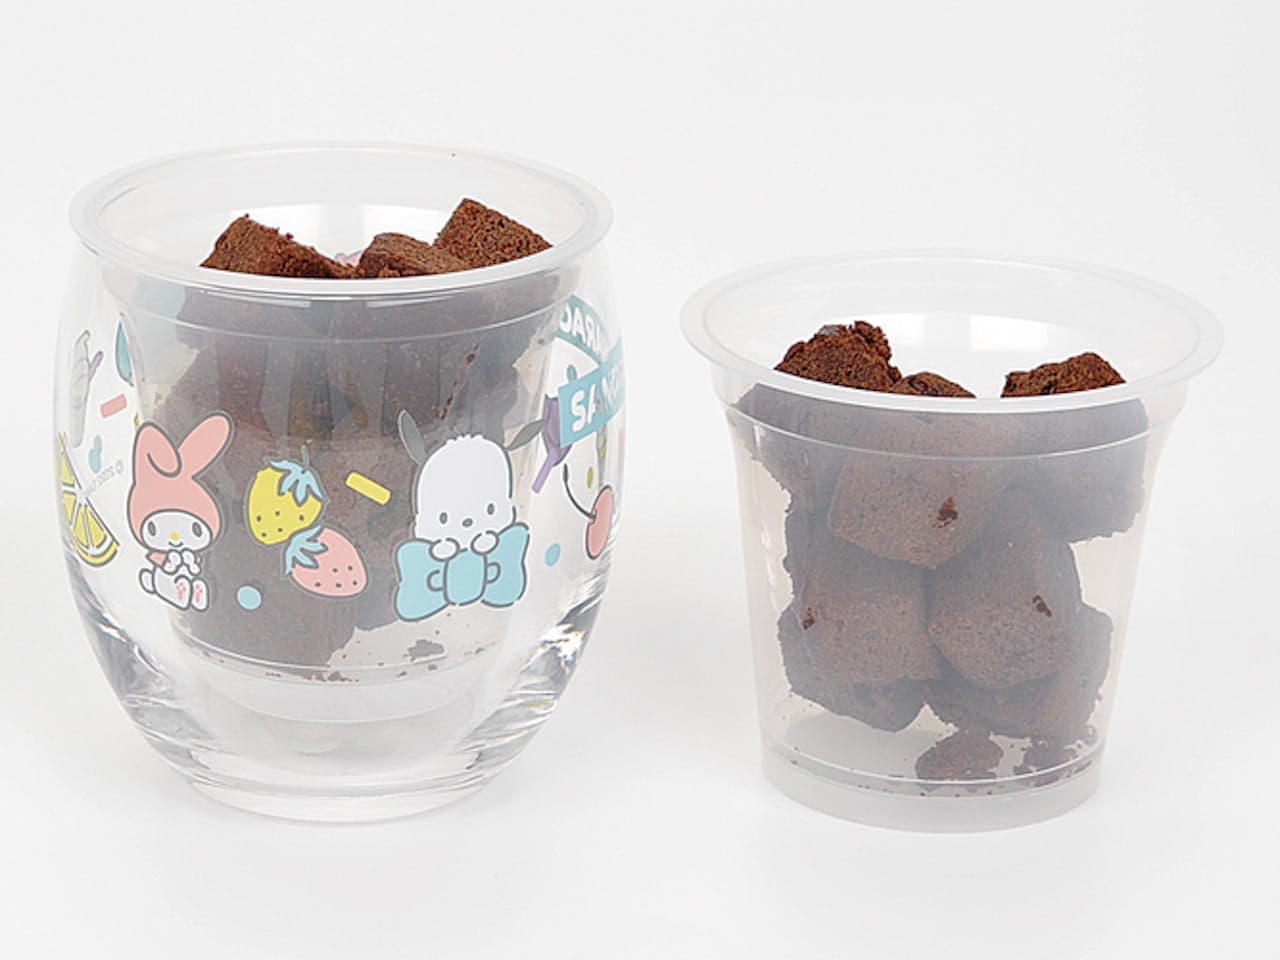 Ministop "Sanrio Characters Chocolate Brownie